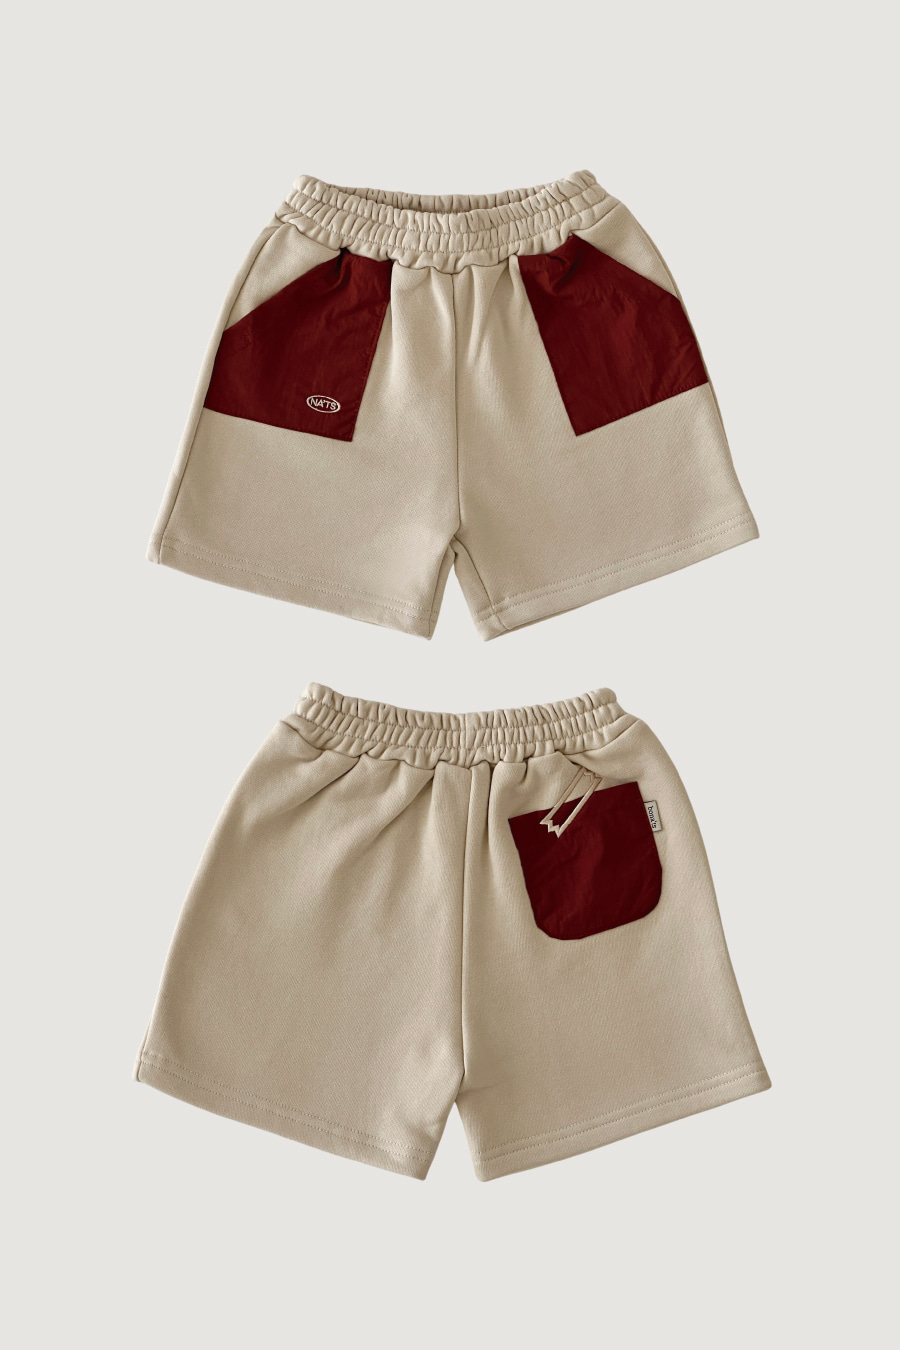 Nats nylon Coloring sweat shorts (Beige)